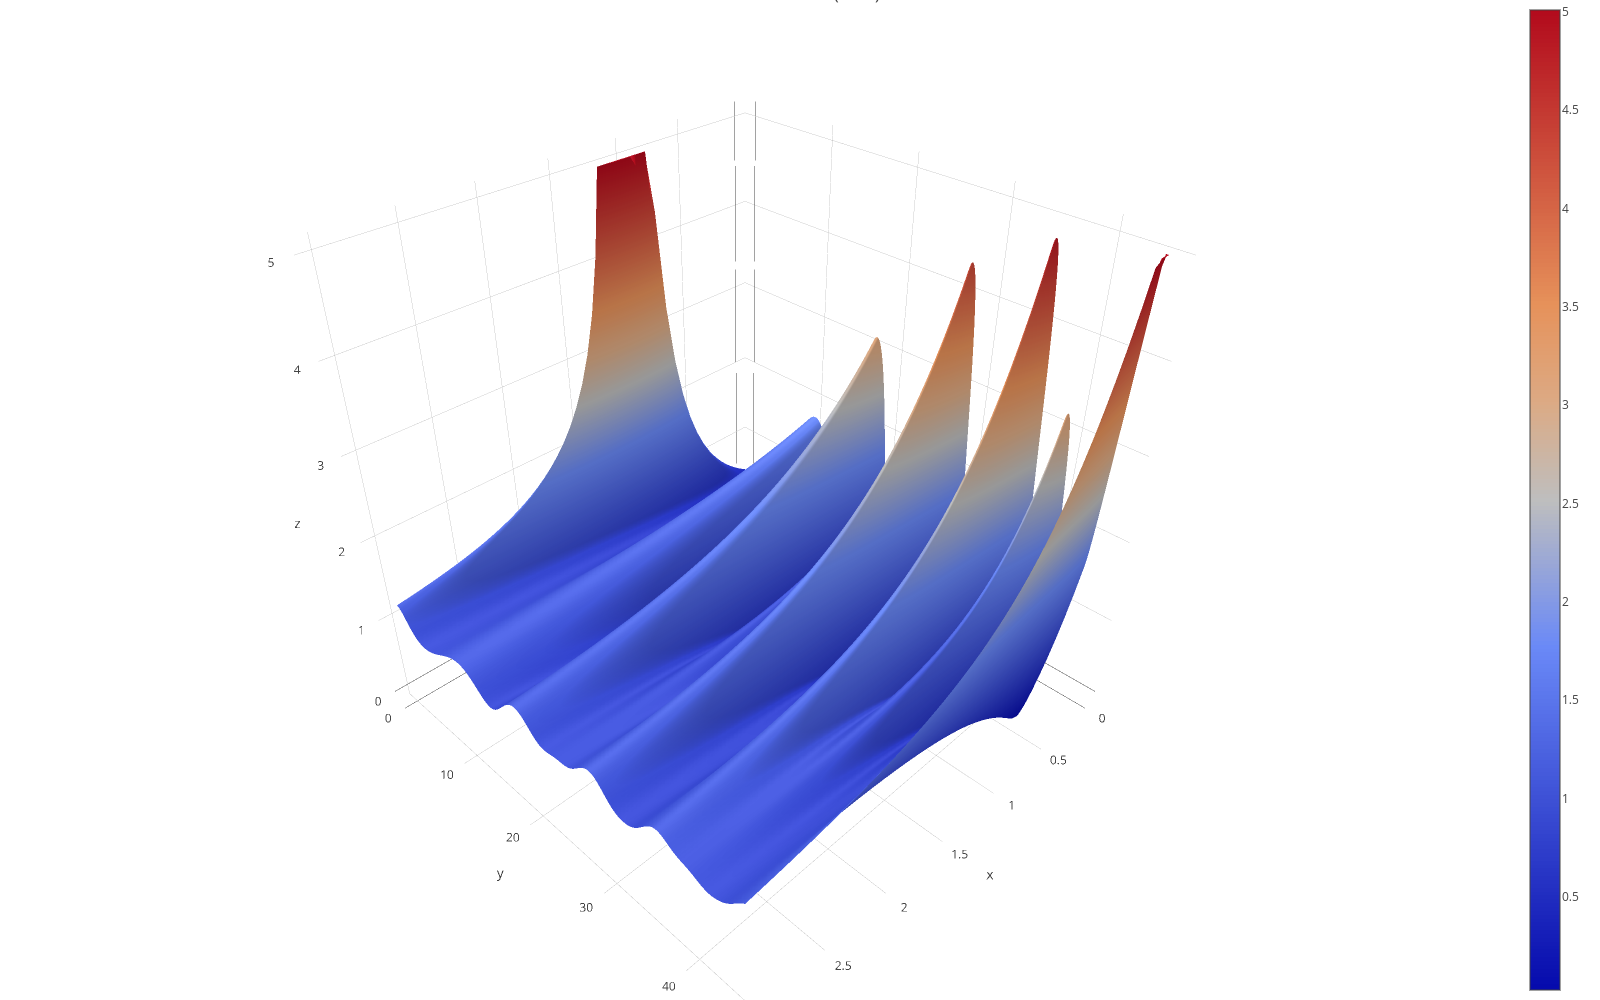 Riemann Zeta (Mod) | surface made by Tuxar | plotly